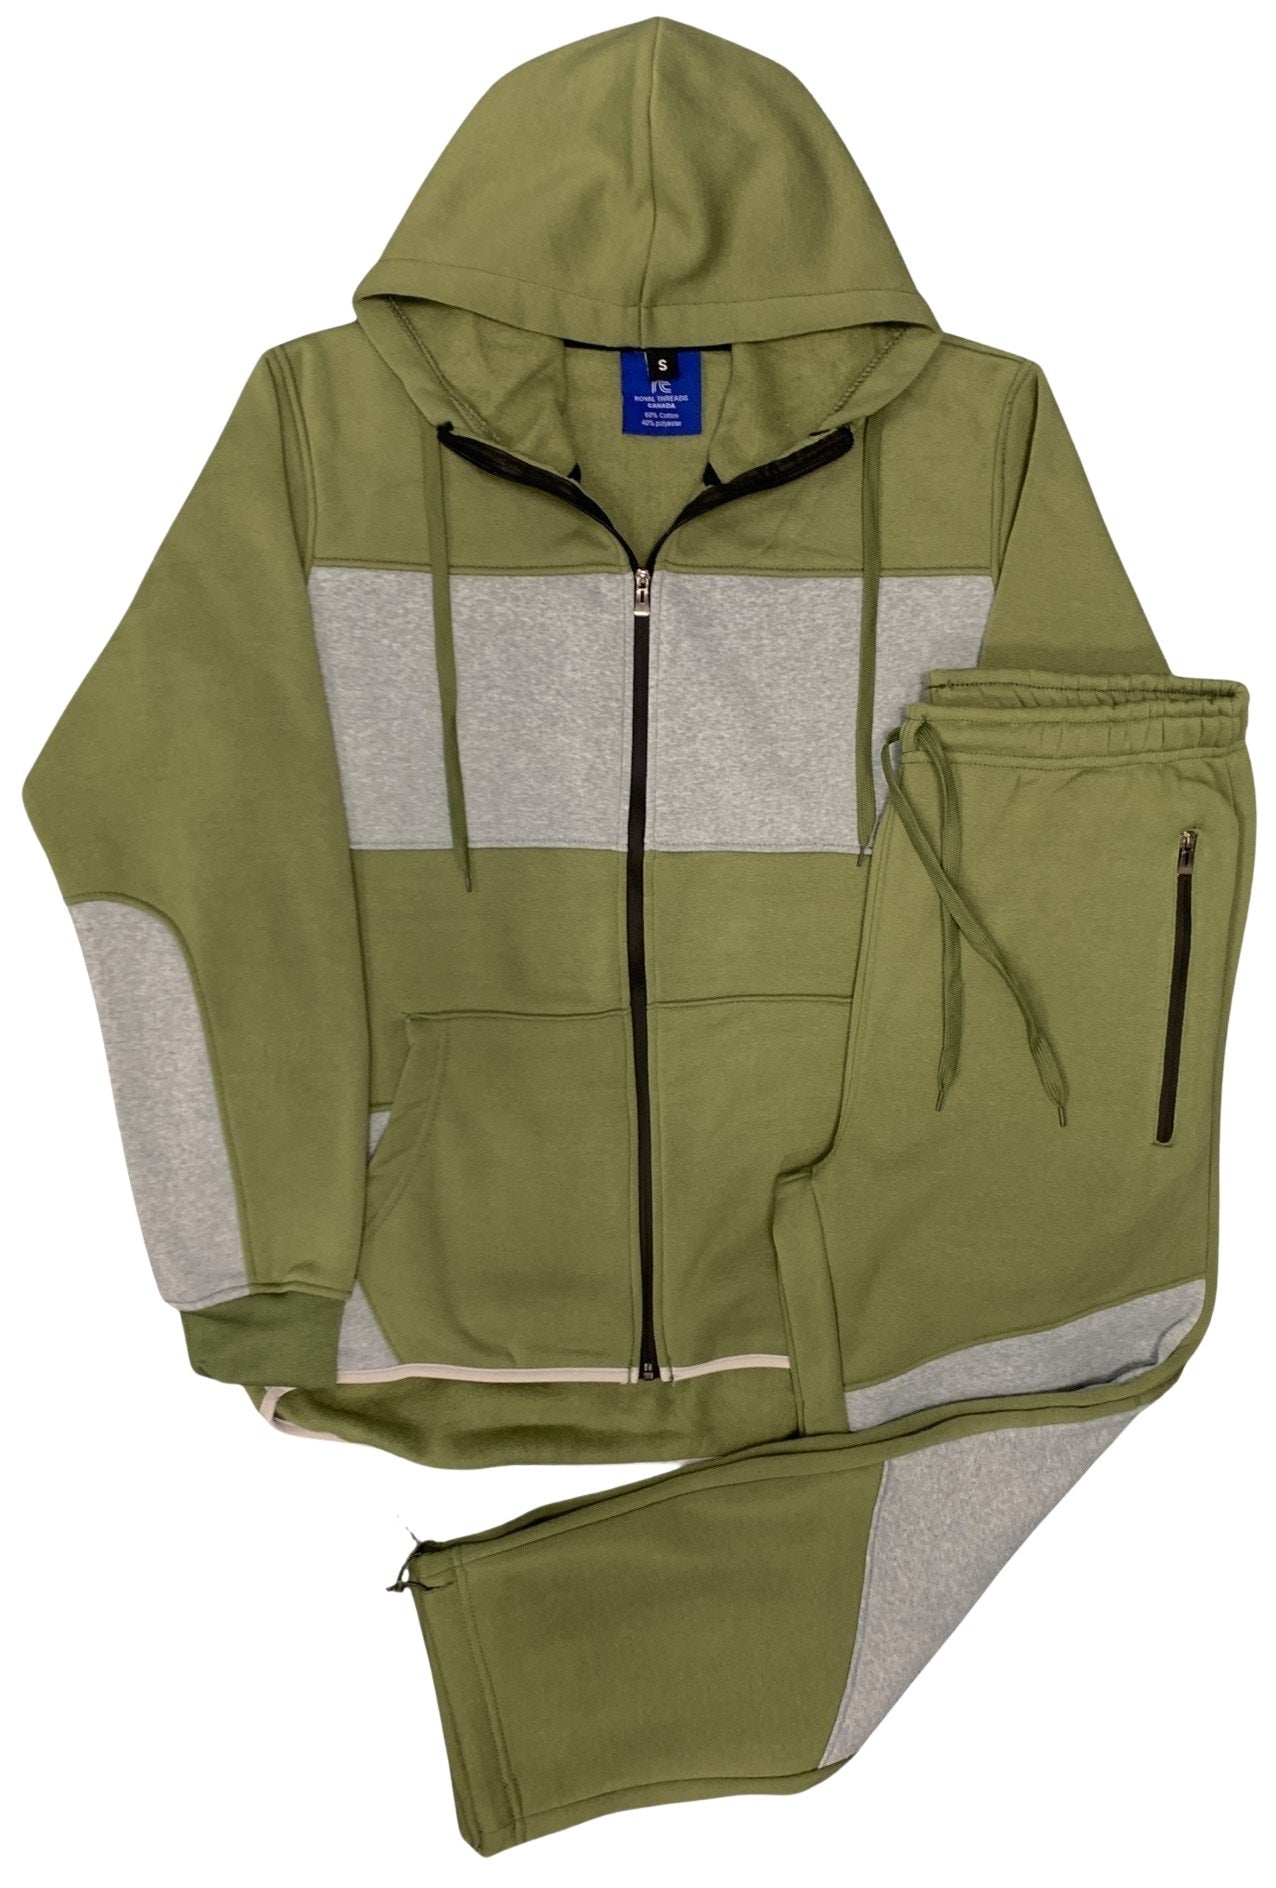 Men’s Full Sweatsuit Cloud Fleece Sweat jacket with Warm winter Sweat pants Matching Suit Outfit